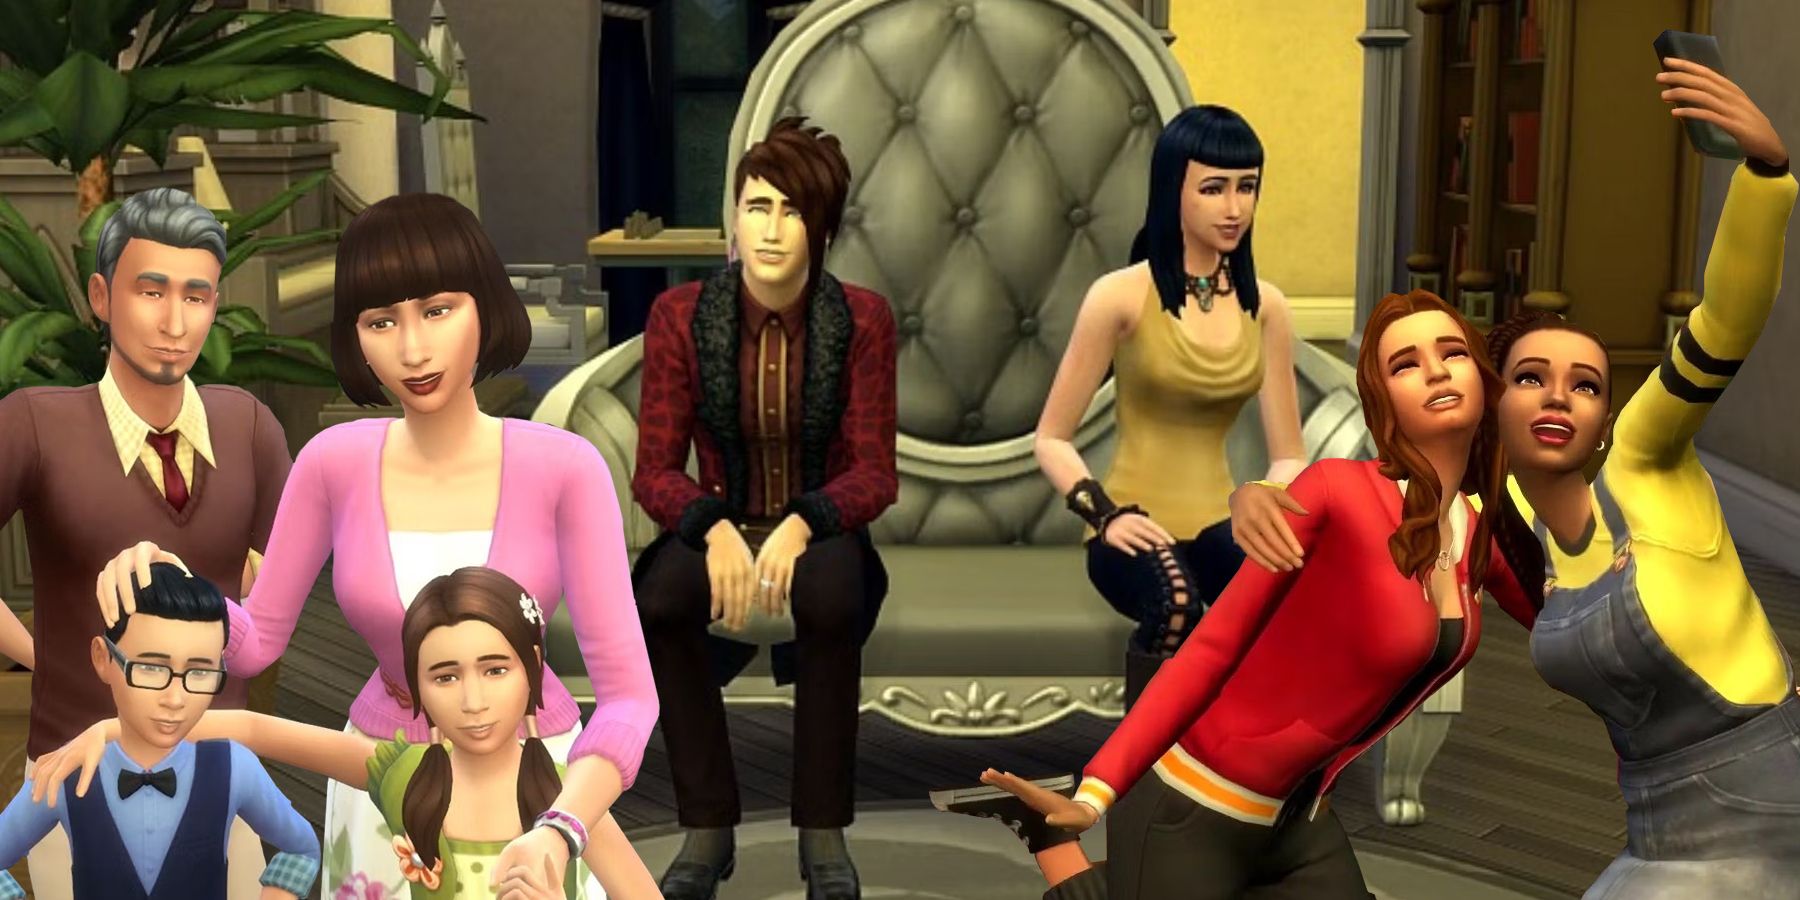 The Sims Mobile- Family Legacies